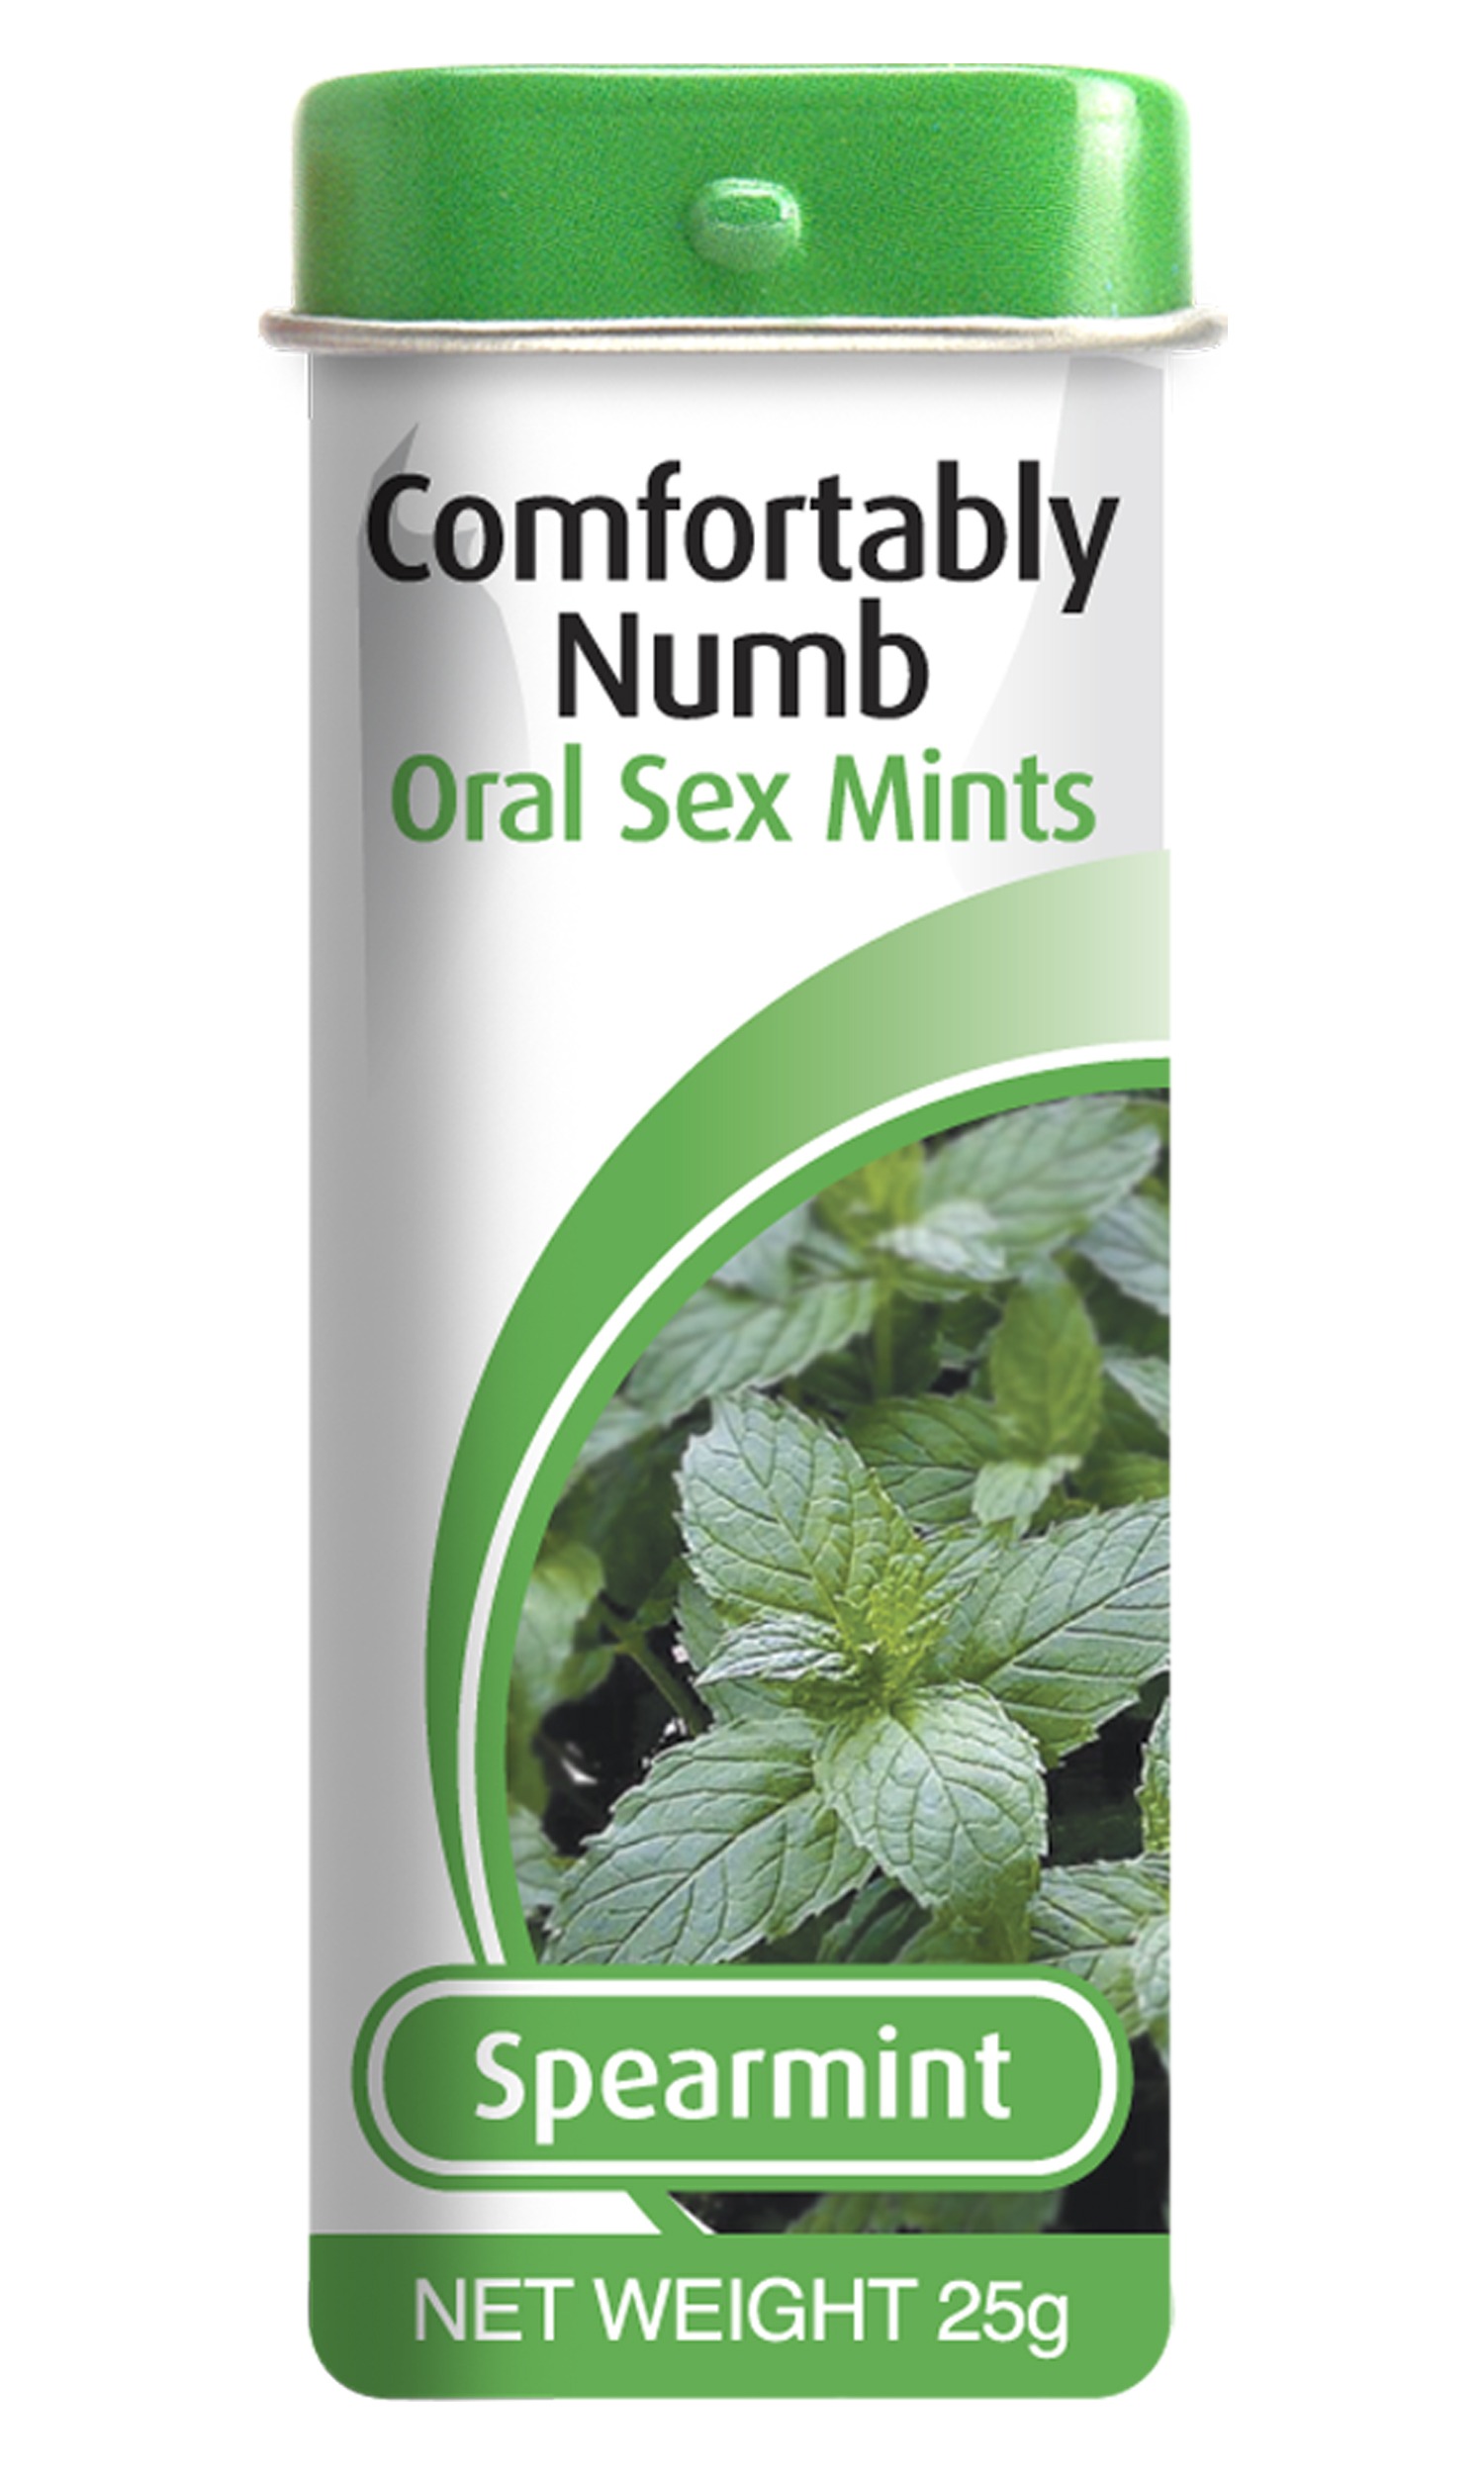 Comfortably numb oral sex mints spearmint.